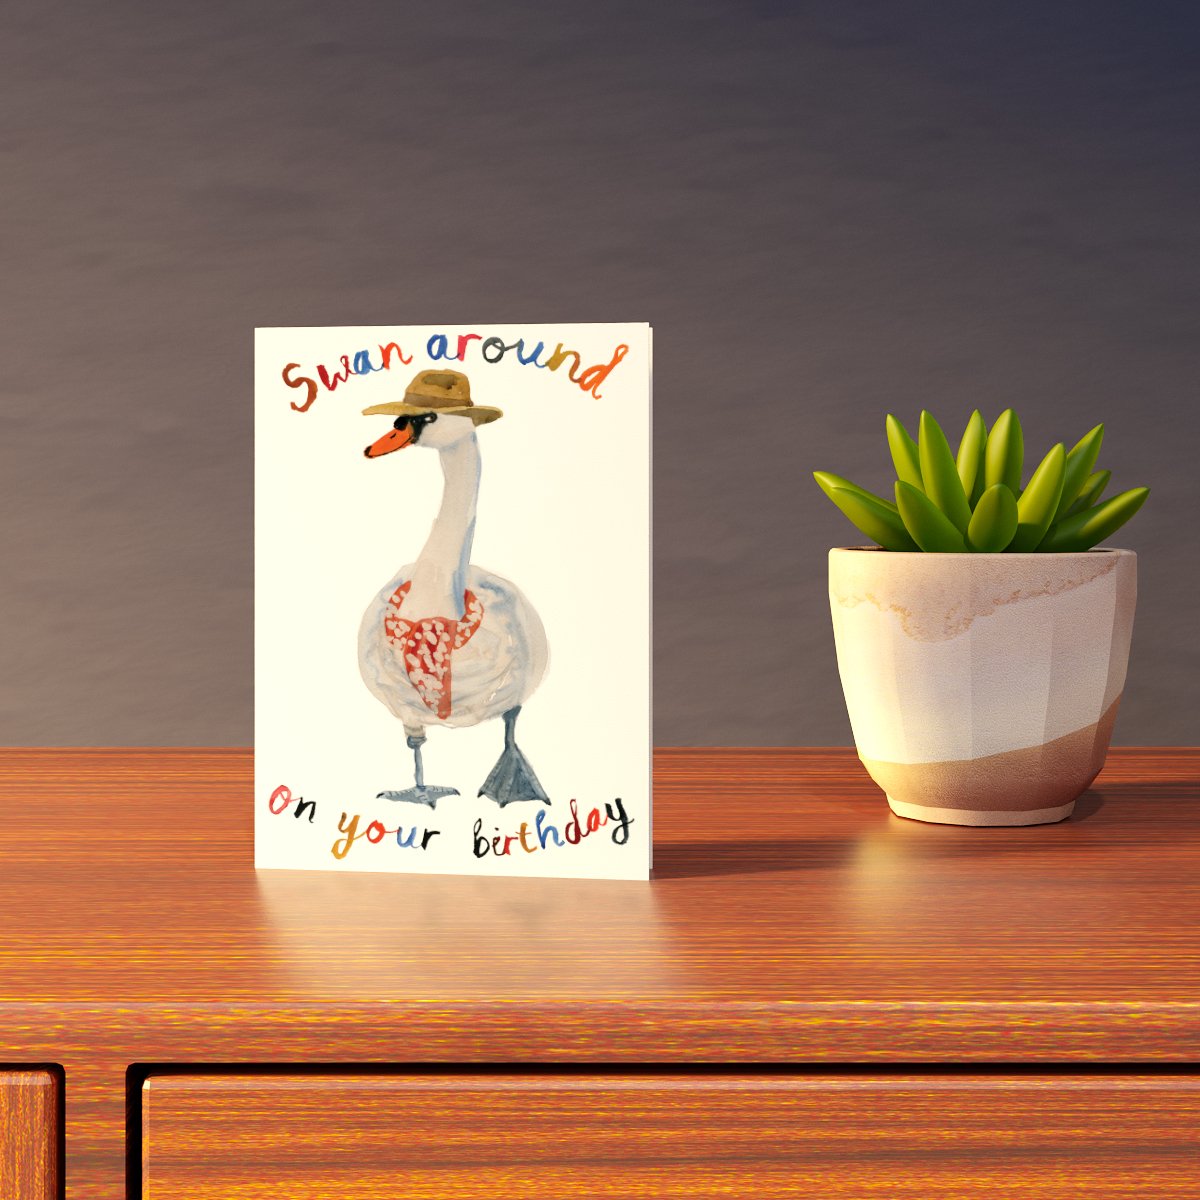 Swan Around On Your Birthday Card